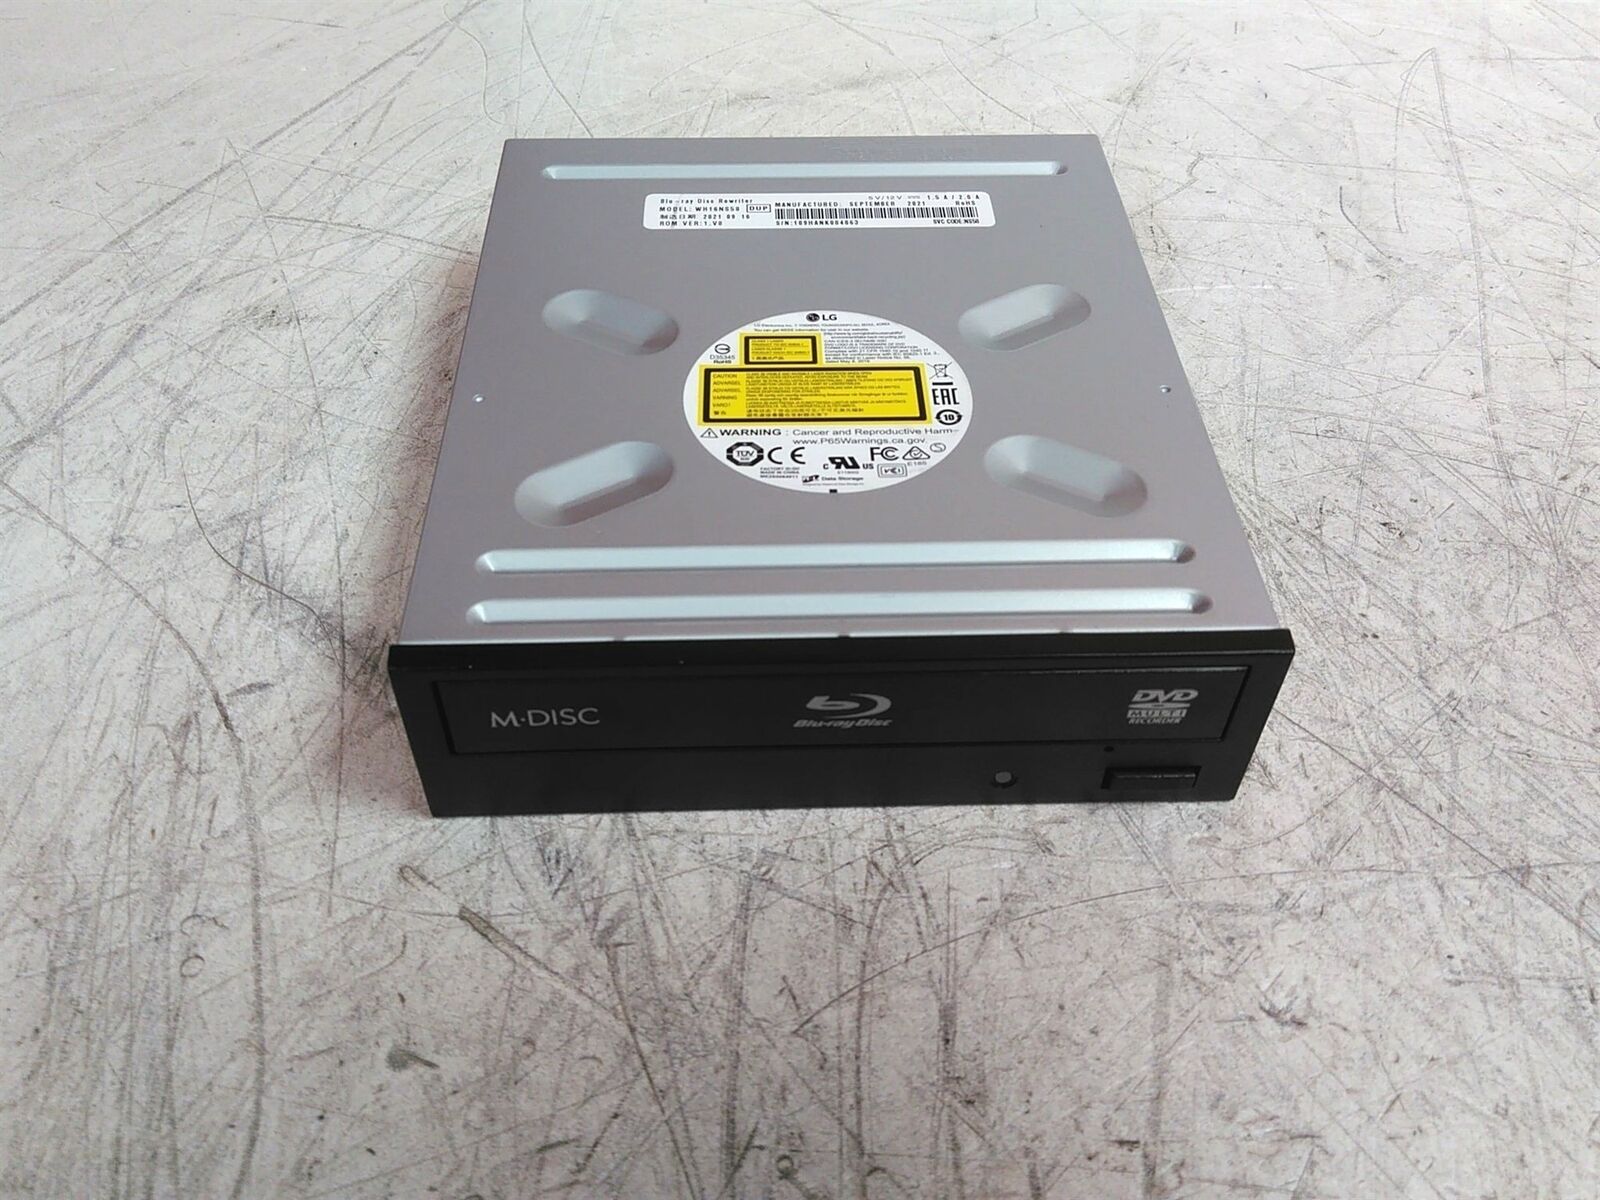 LG WH16NS58 Internal SATA Blu-Ray Disc Rewriter